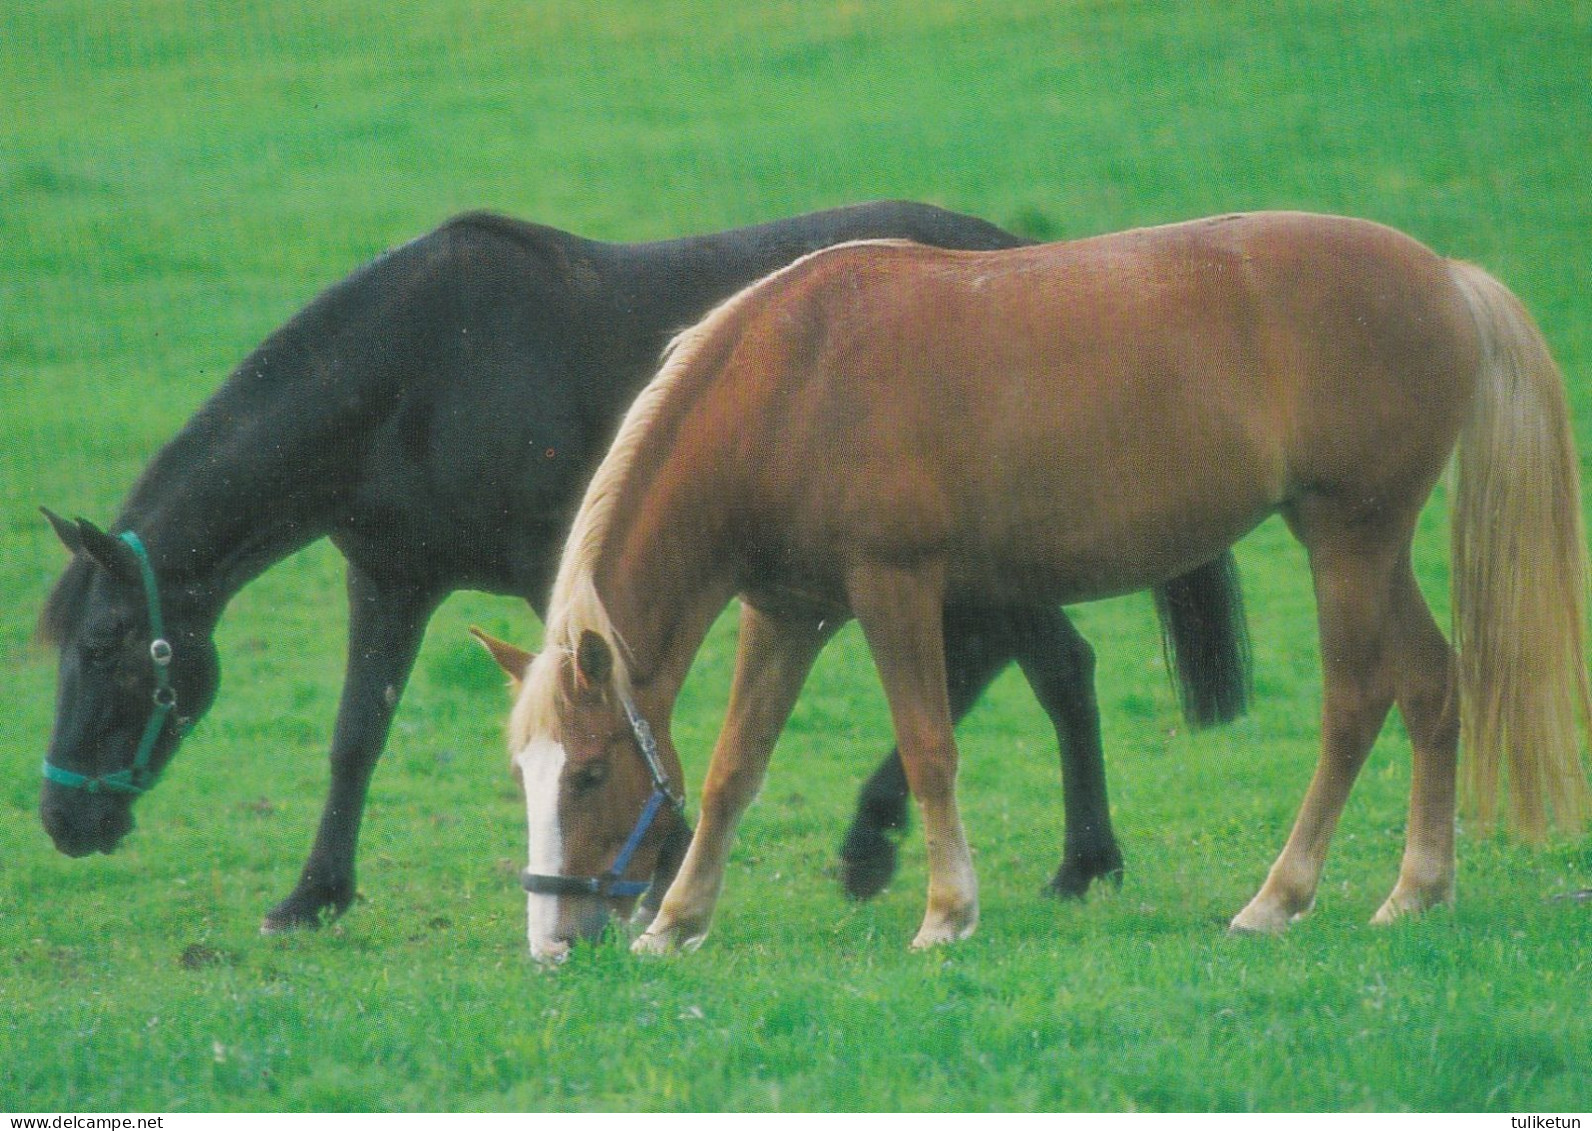 Horse - Cheval - Paard - Pferd - Cavallo - Cavalo - Caballo - Häst - Karto - Finland - Paarden